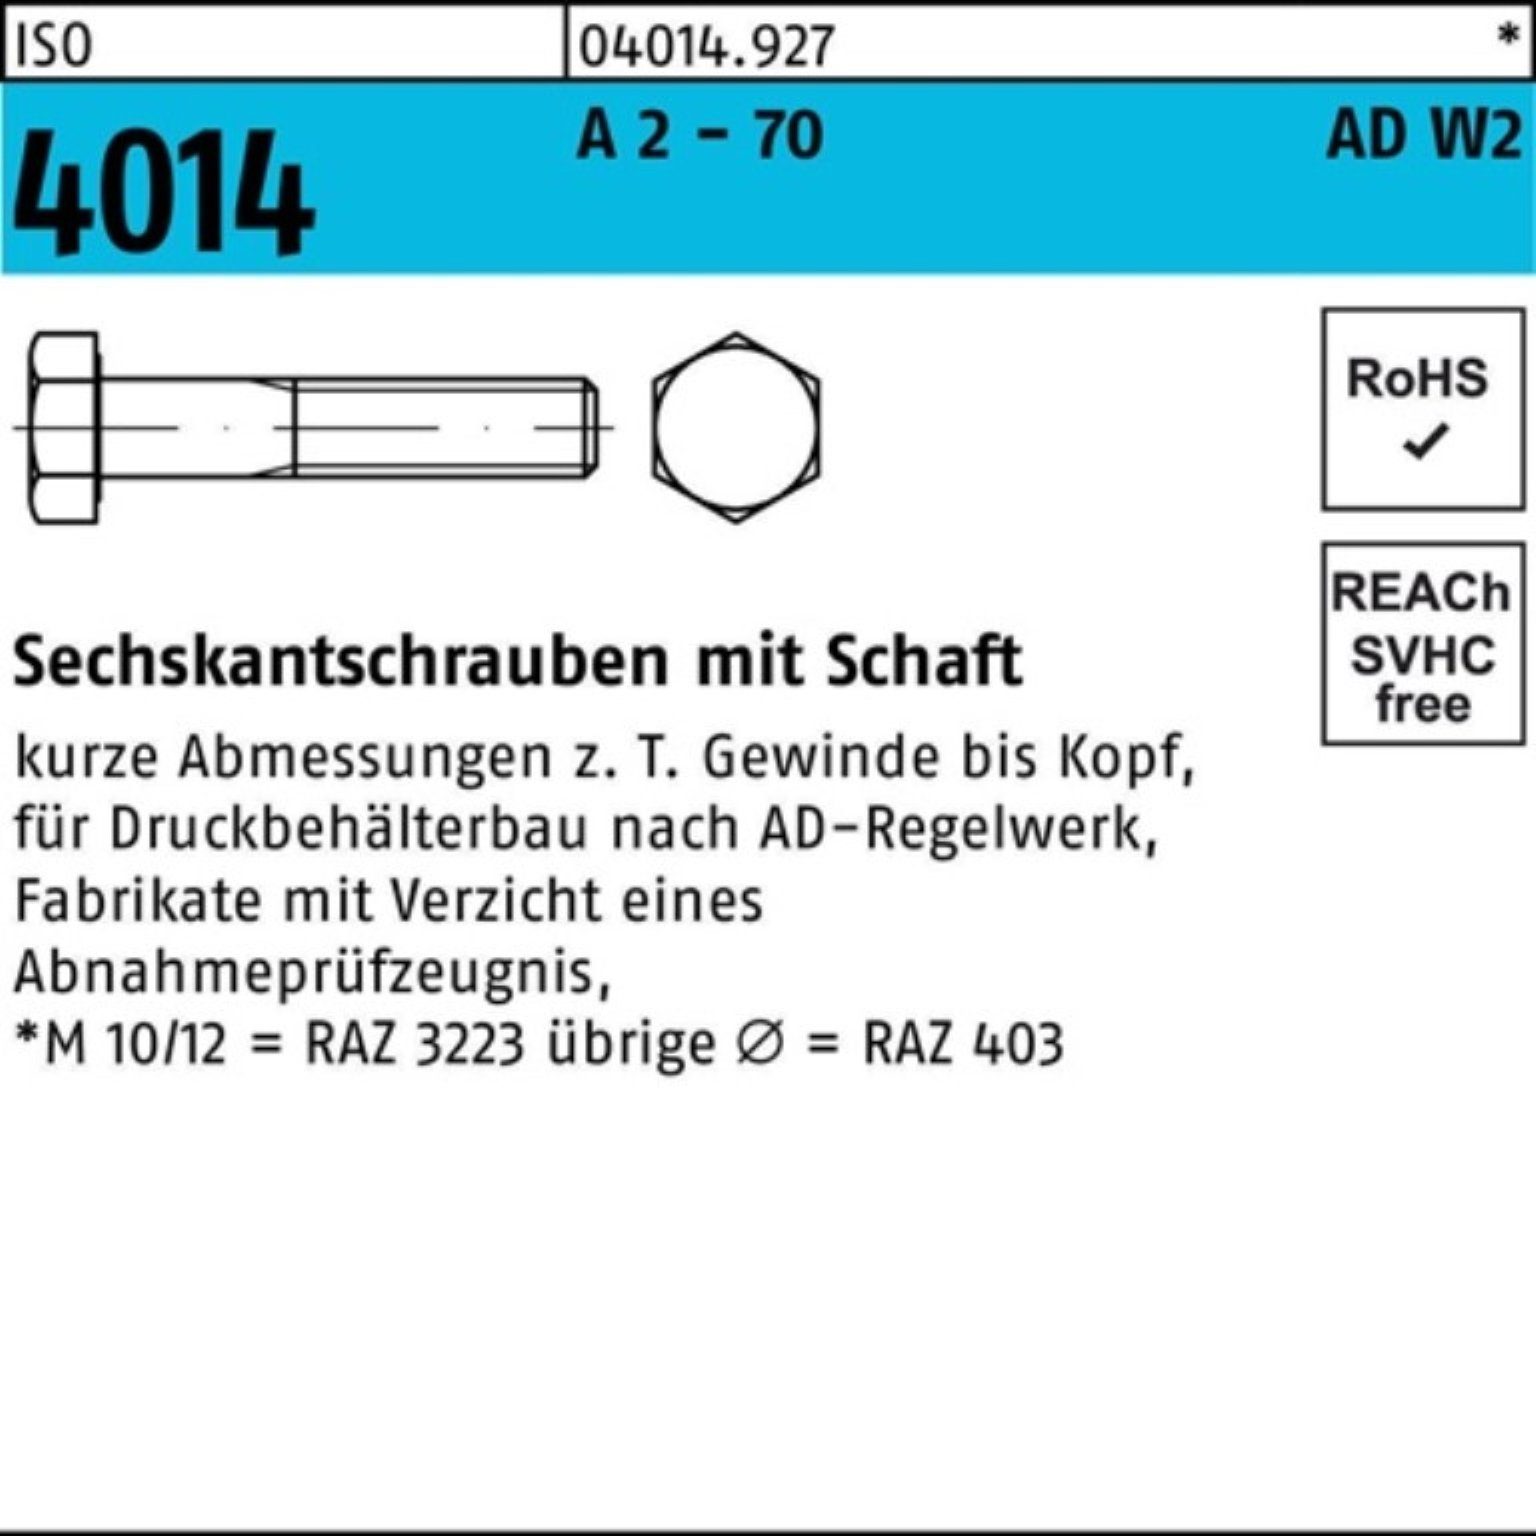 Supermarkt Bufab Sechskantschraube 100er 5 M10x Sechskantschraube ISO AD-W2 Schaft 120 Pack A 70 2 4014 